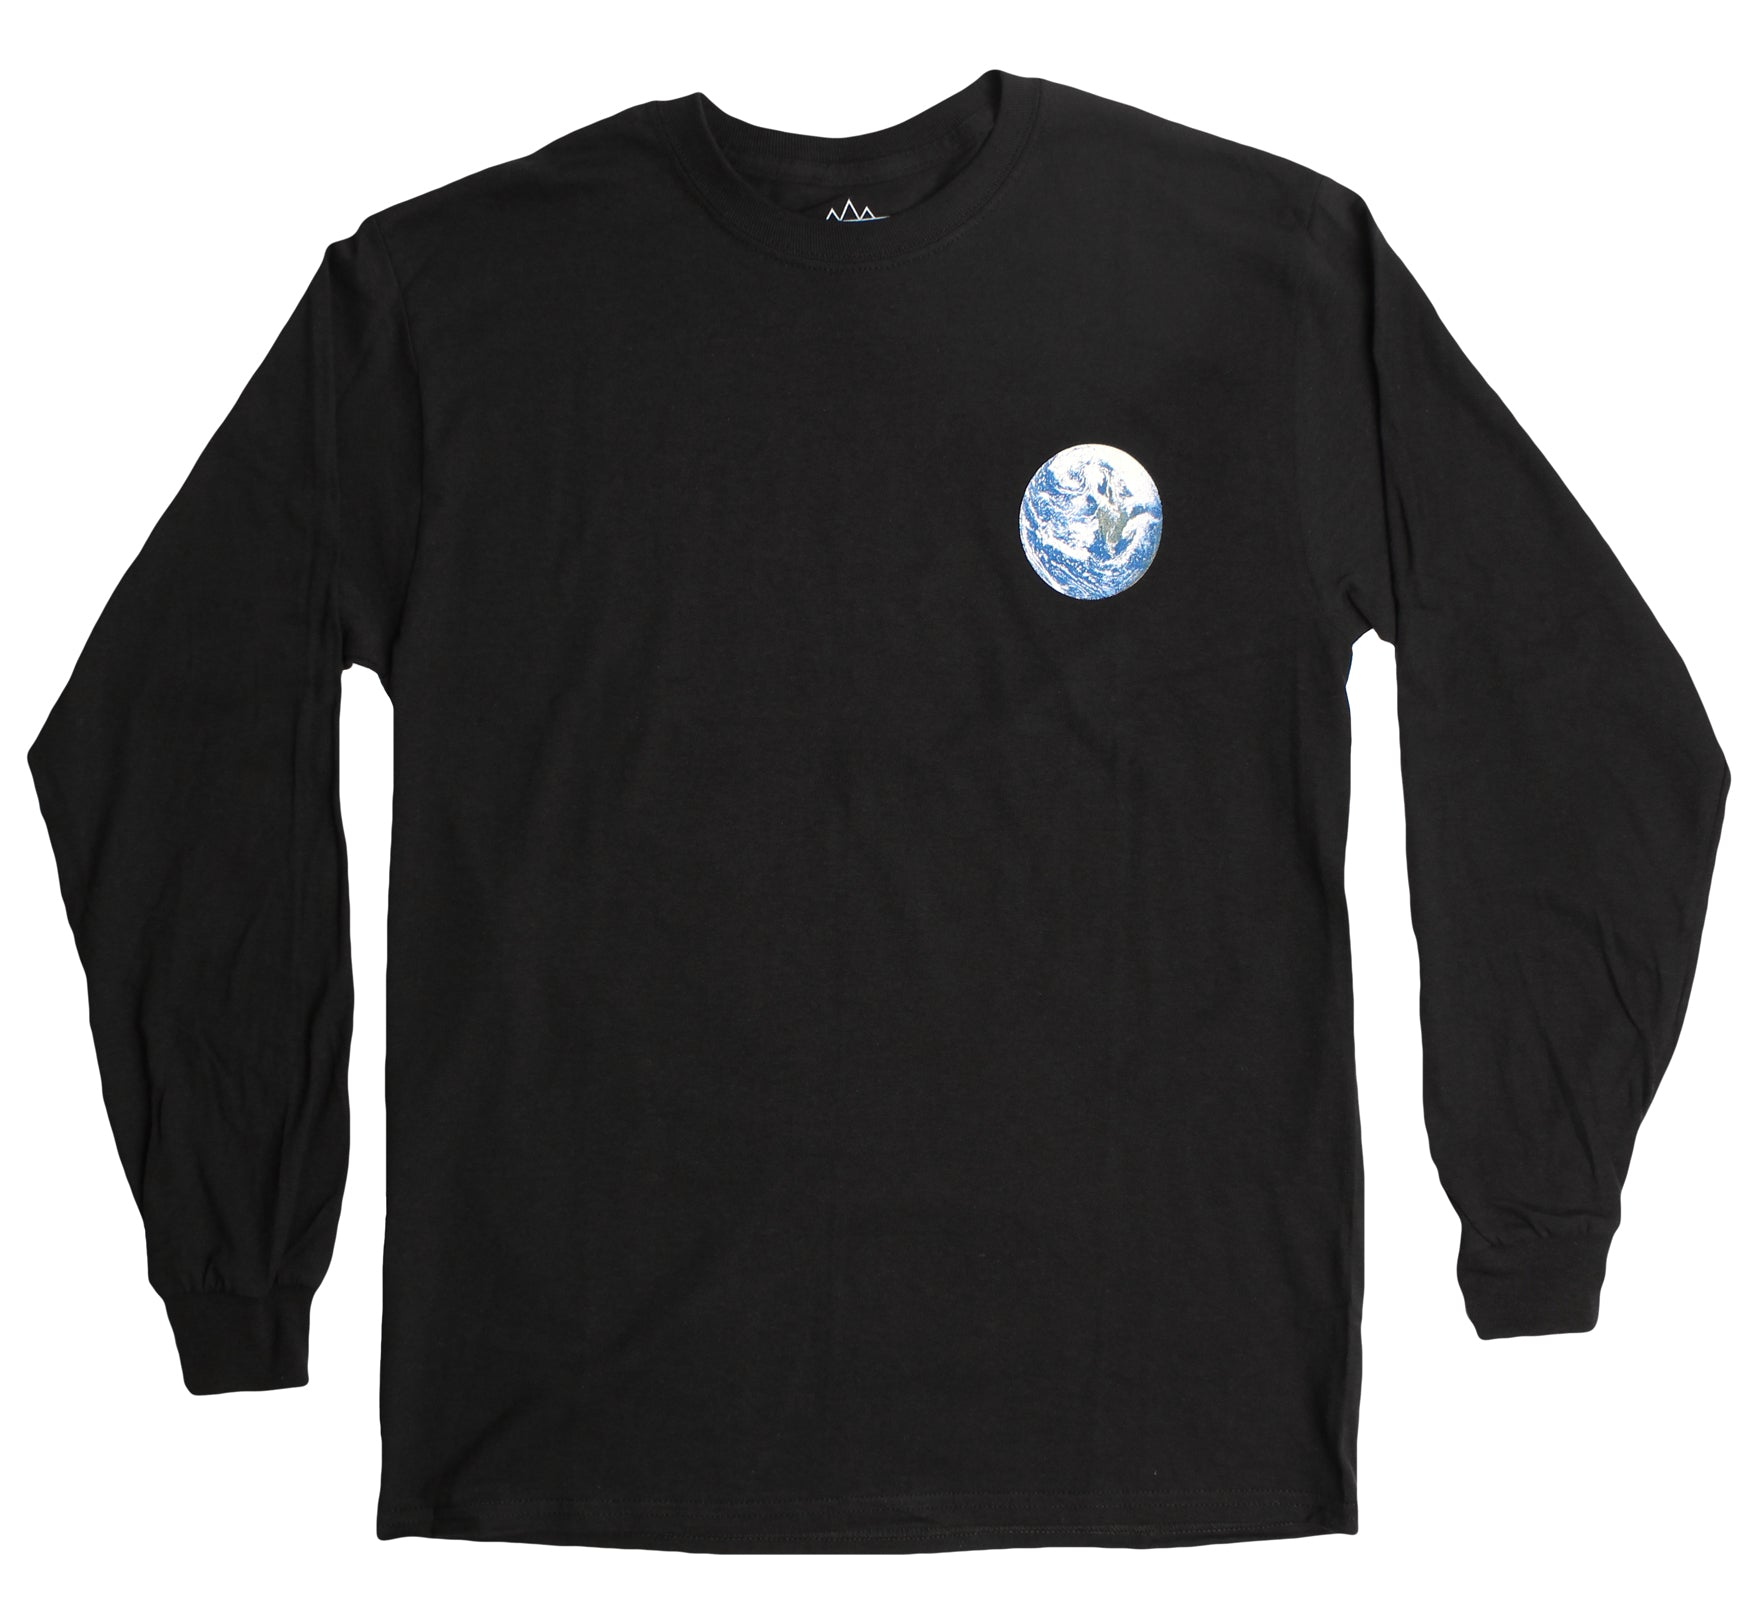 Astronaut Over Earth L/S black T-shirt by Altru Apparel